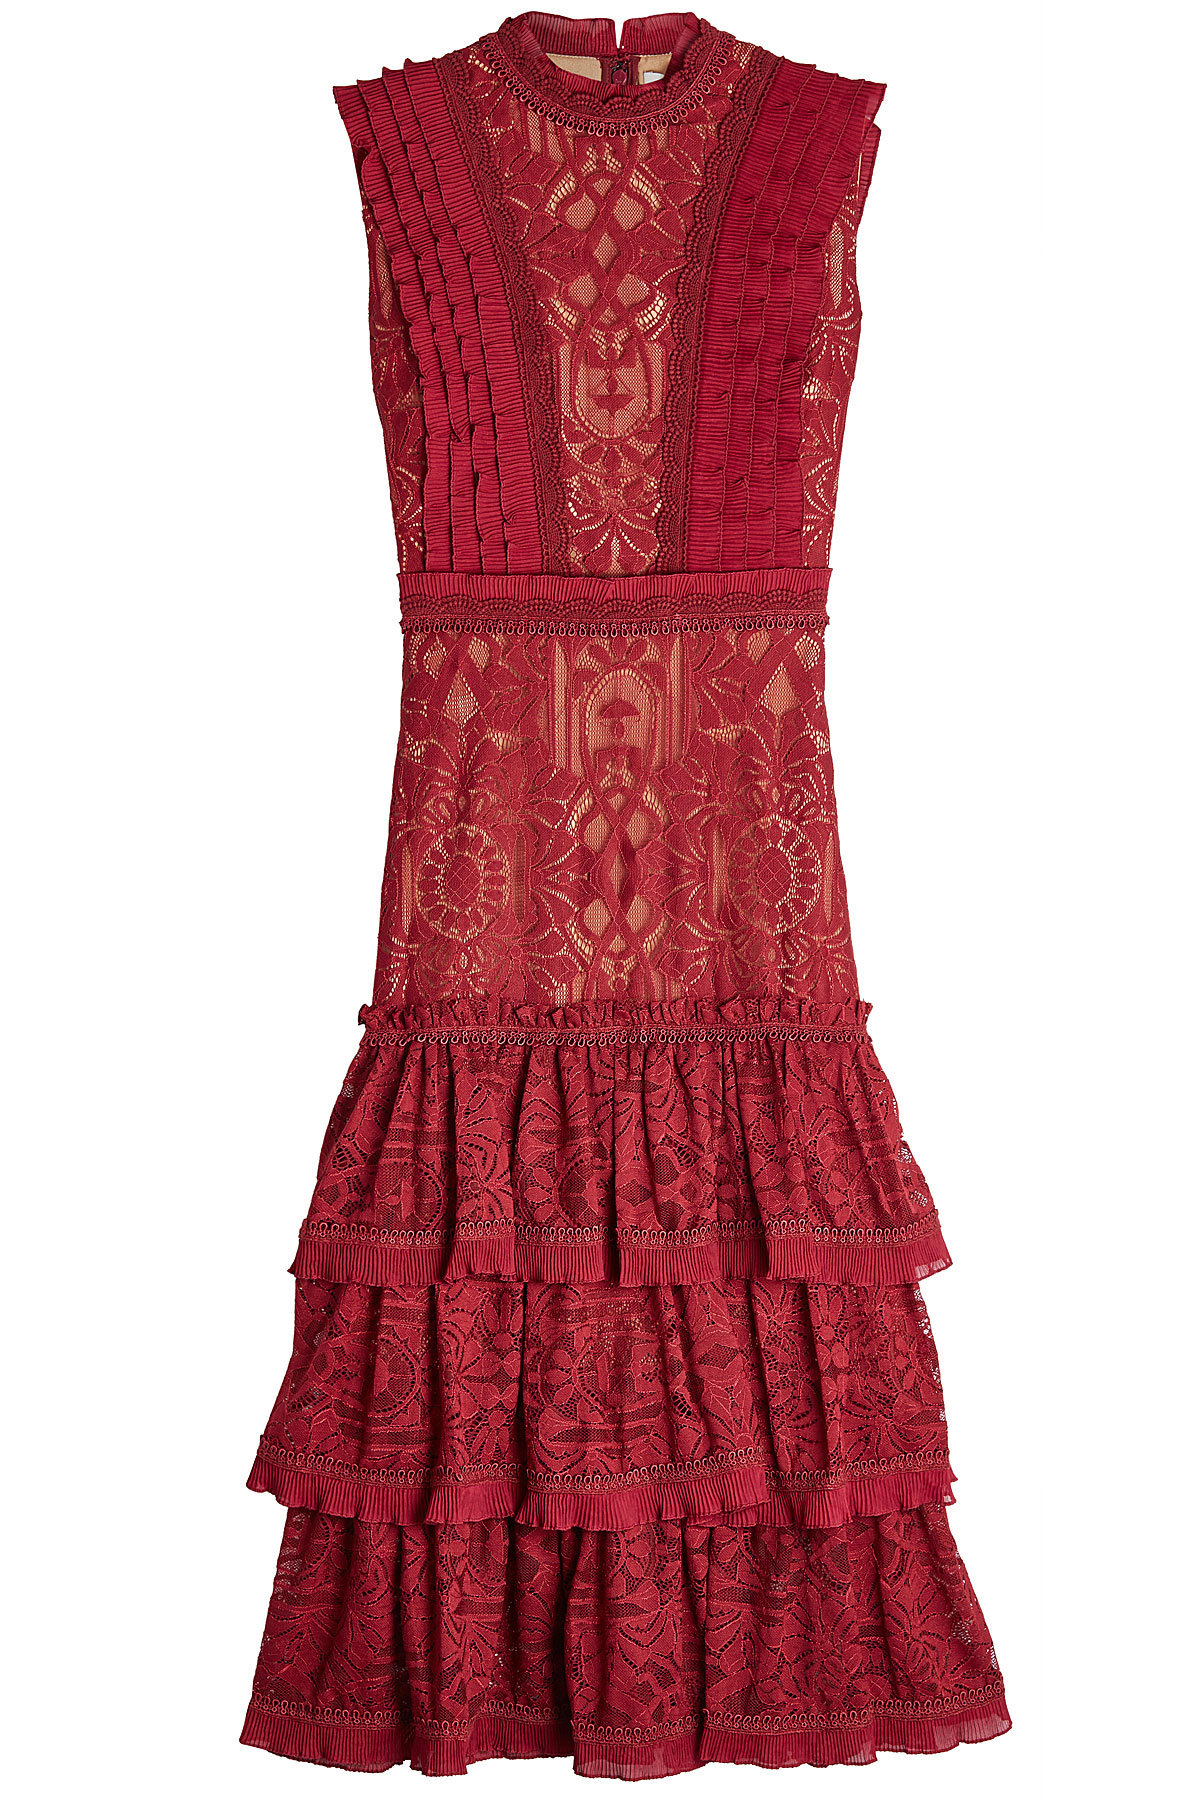 Sleeveless Dress with Lace Overlay by Jonathan Simkhai